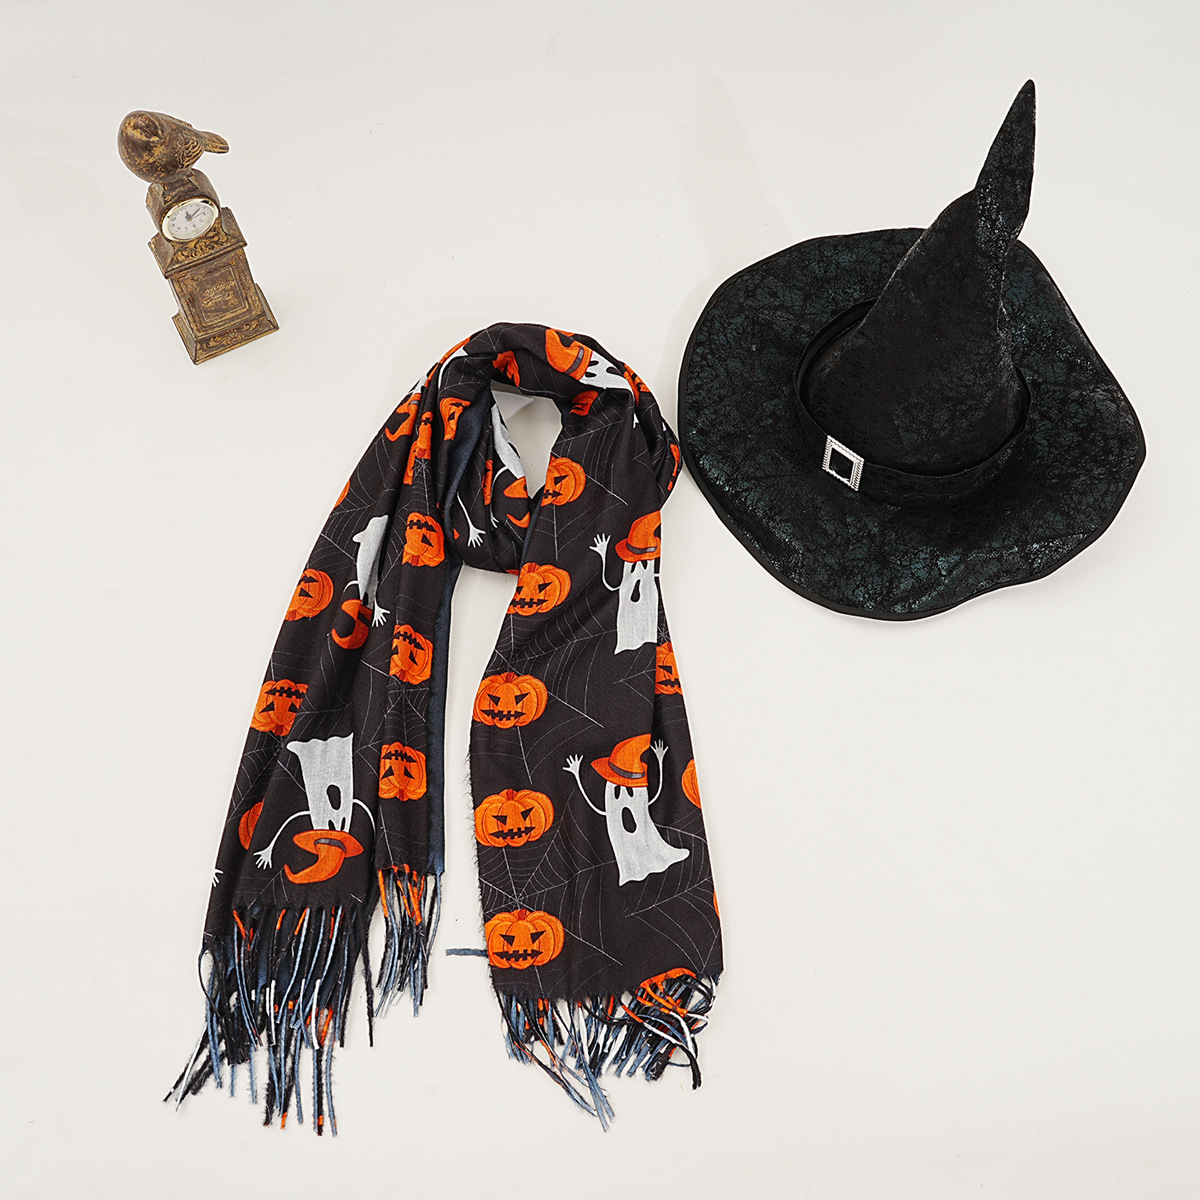 New Cashmere-like Black Halloween Ghost Pumpkin Digital Printing Scarf Magic Awakening Wizard's Hat Set